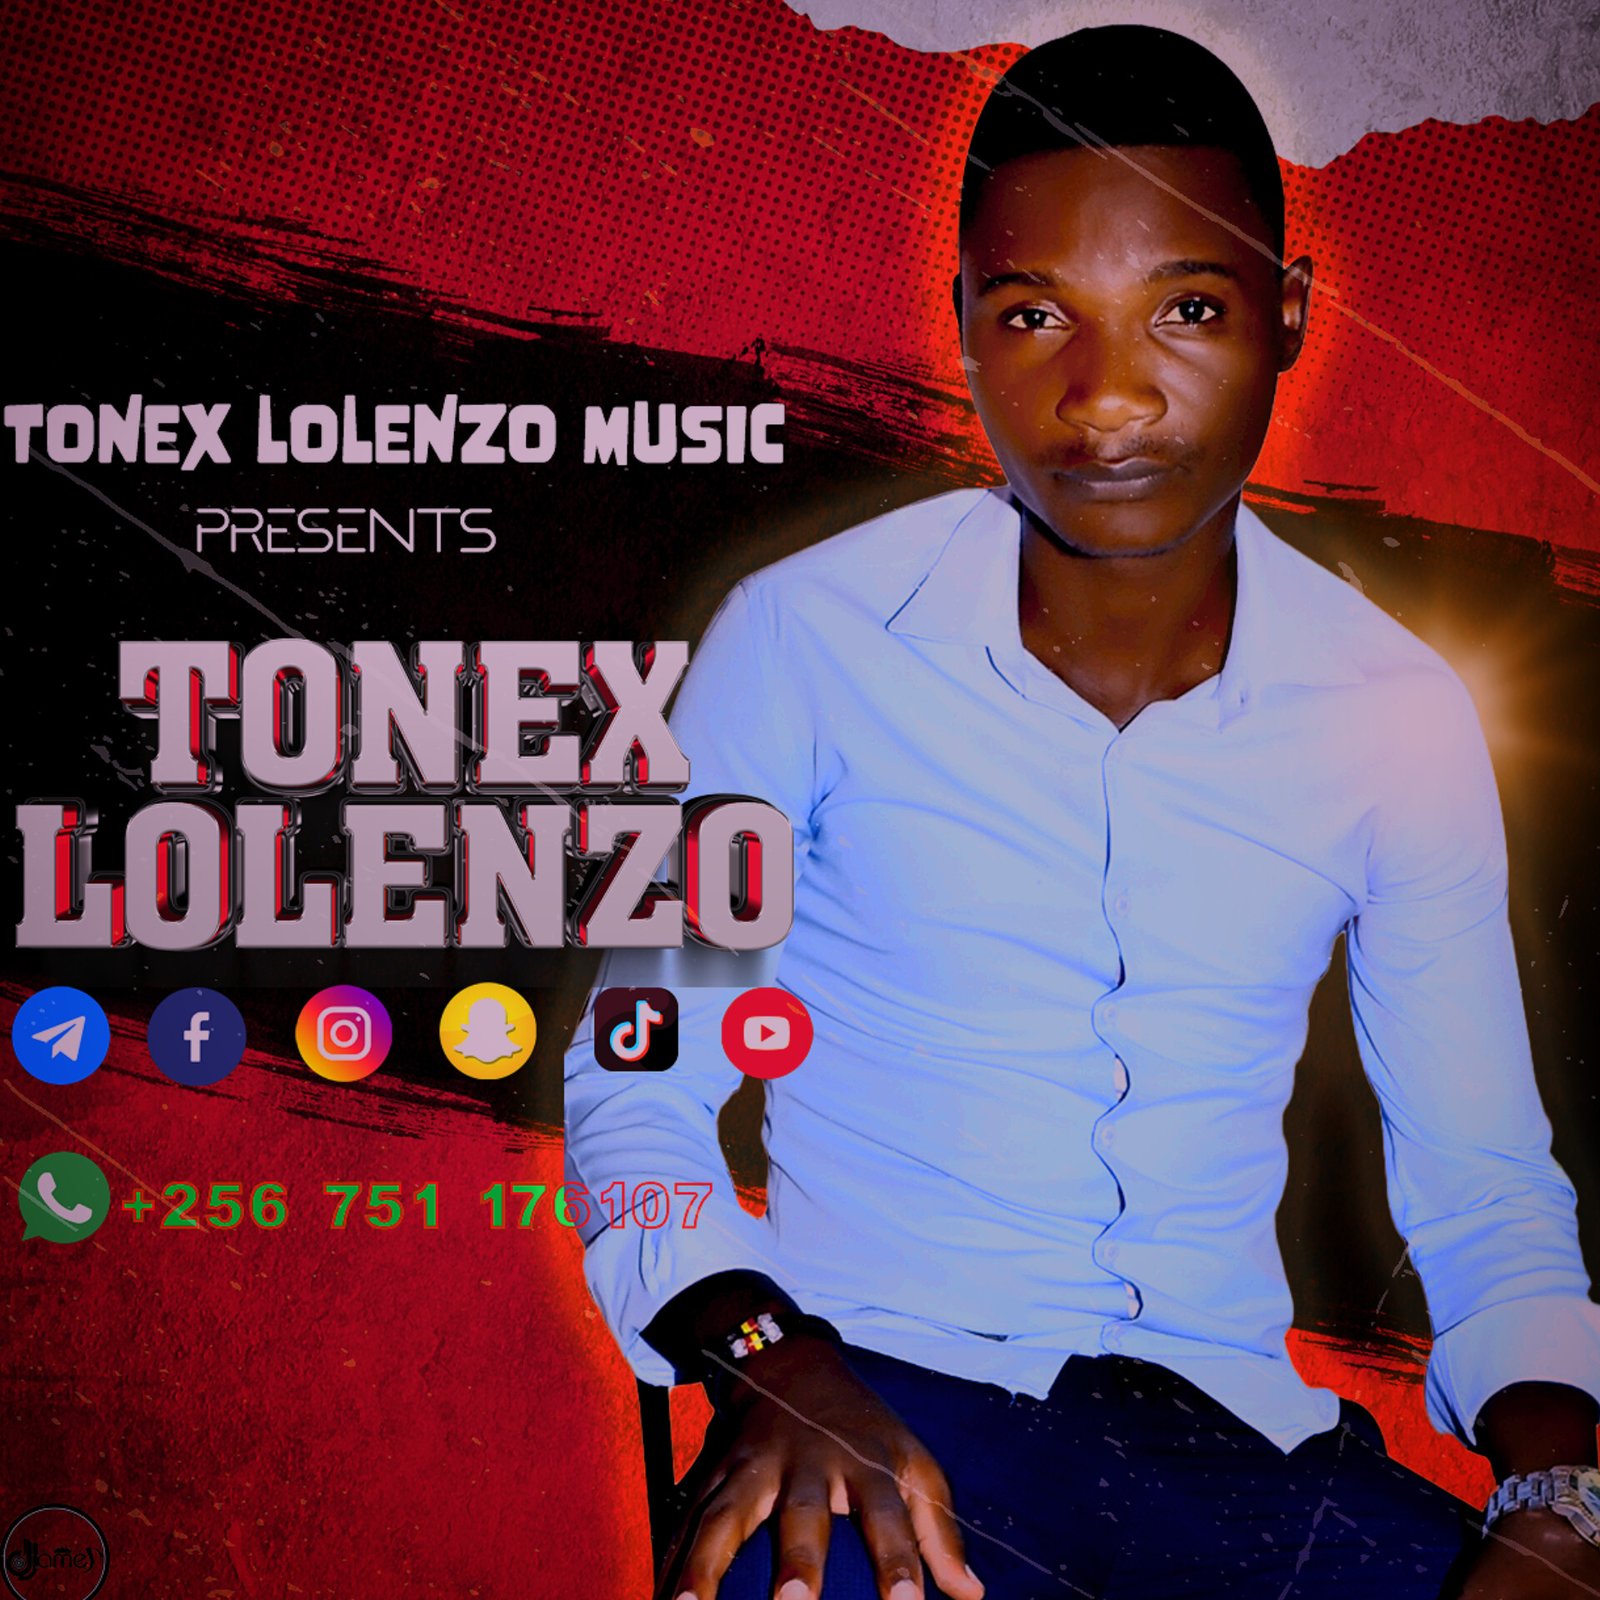 Tonex Lorenzo